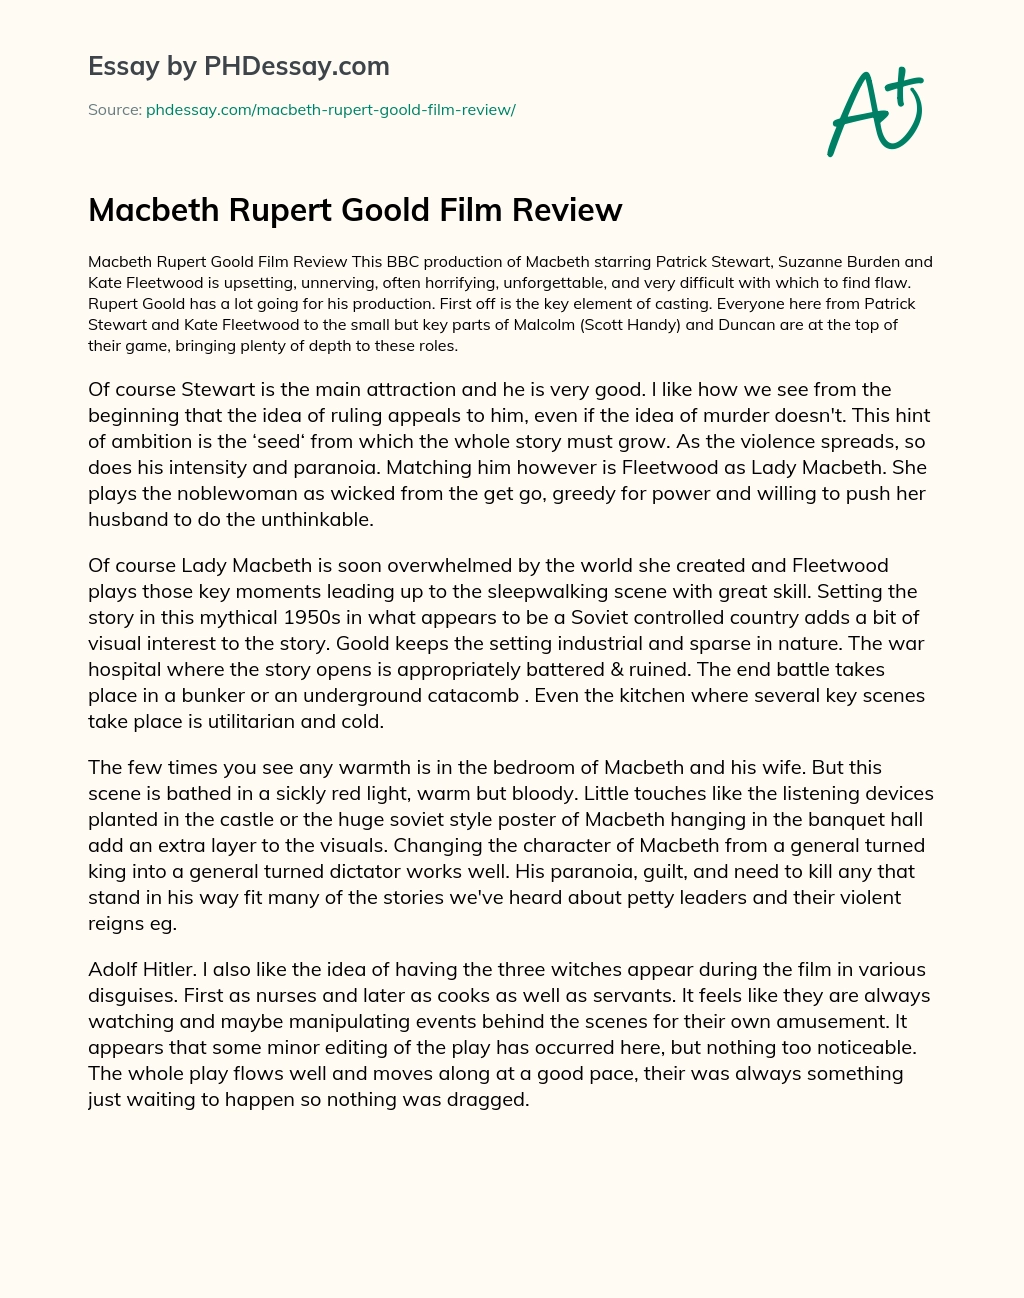 Macbeth Rupert Goold Film Review essay